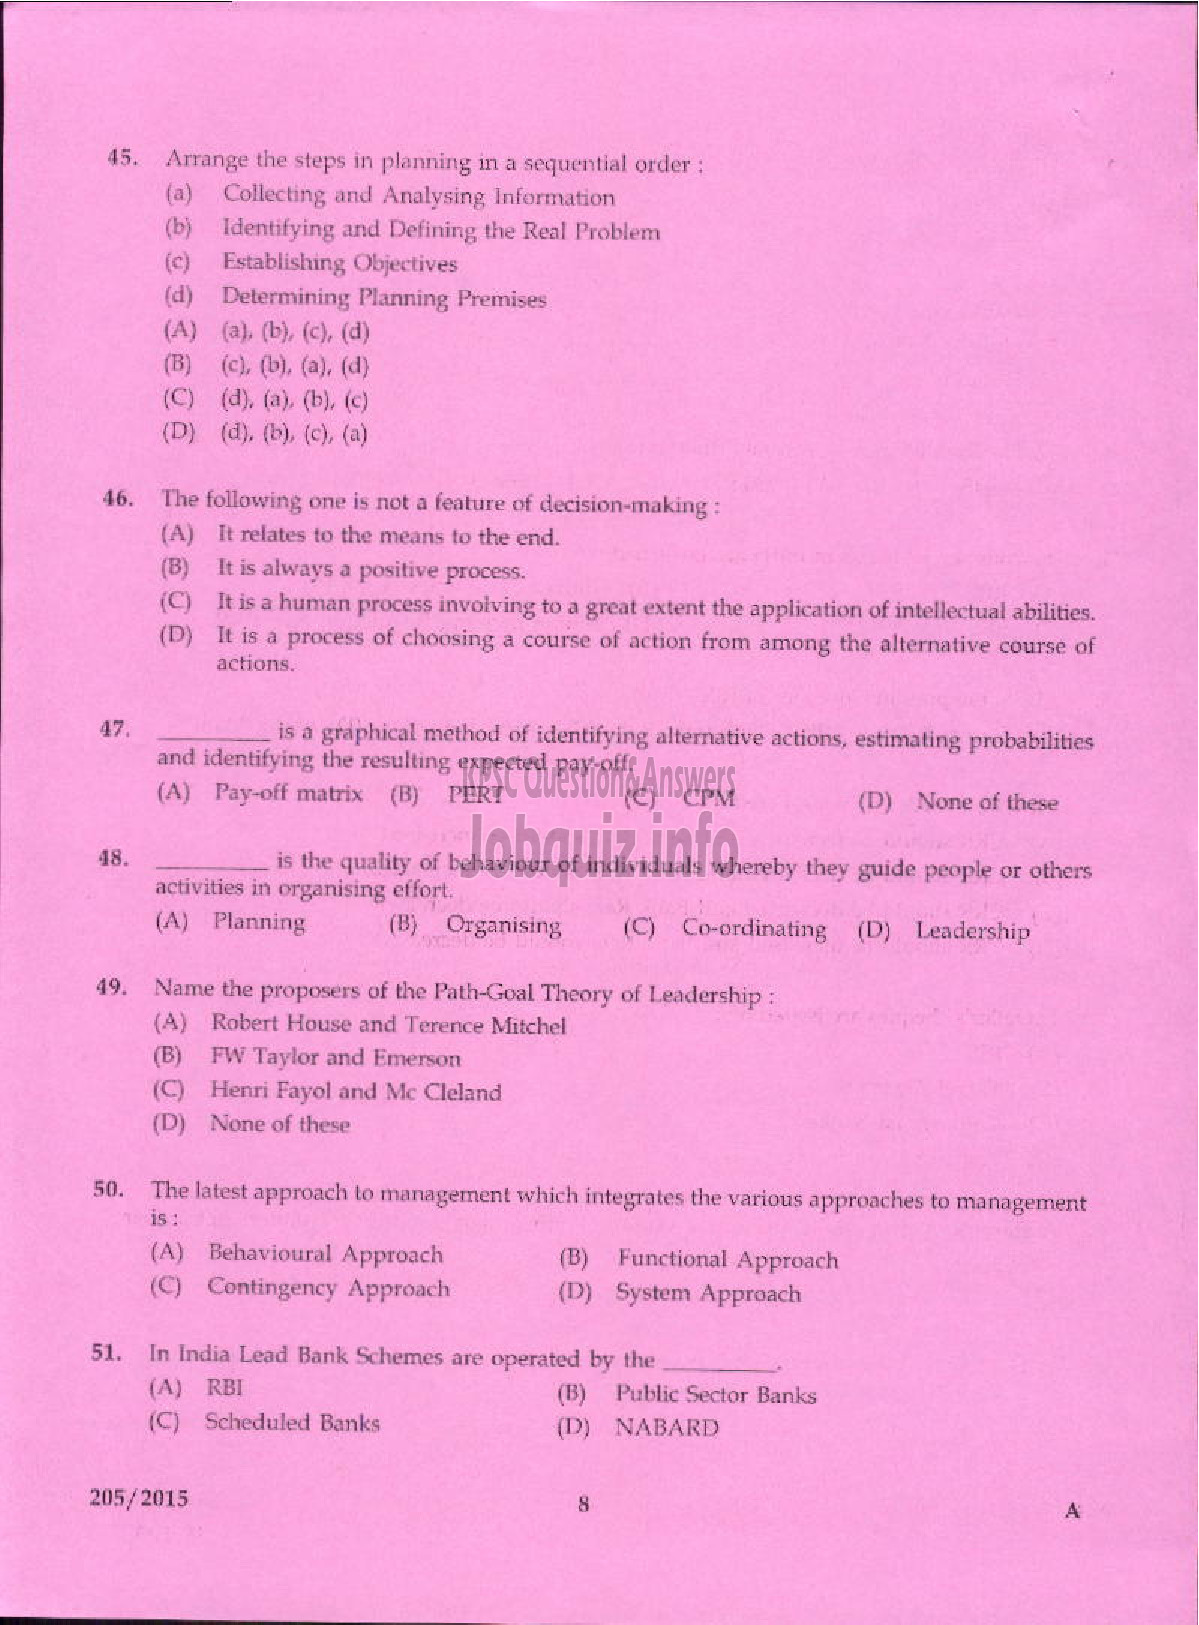 Kerala PSC Question Paper - MARKETING ORGANISER PART I AND PART II KCMMF LTD-6